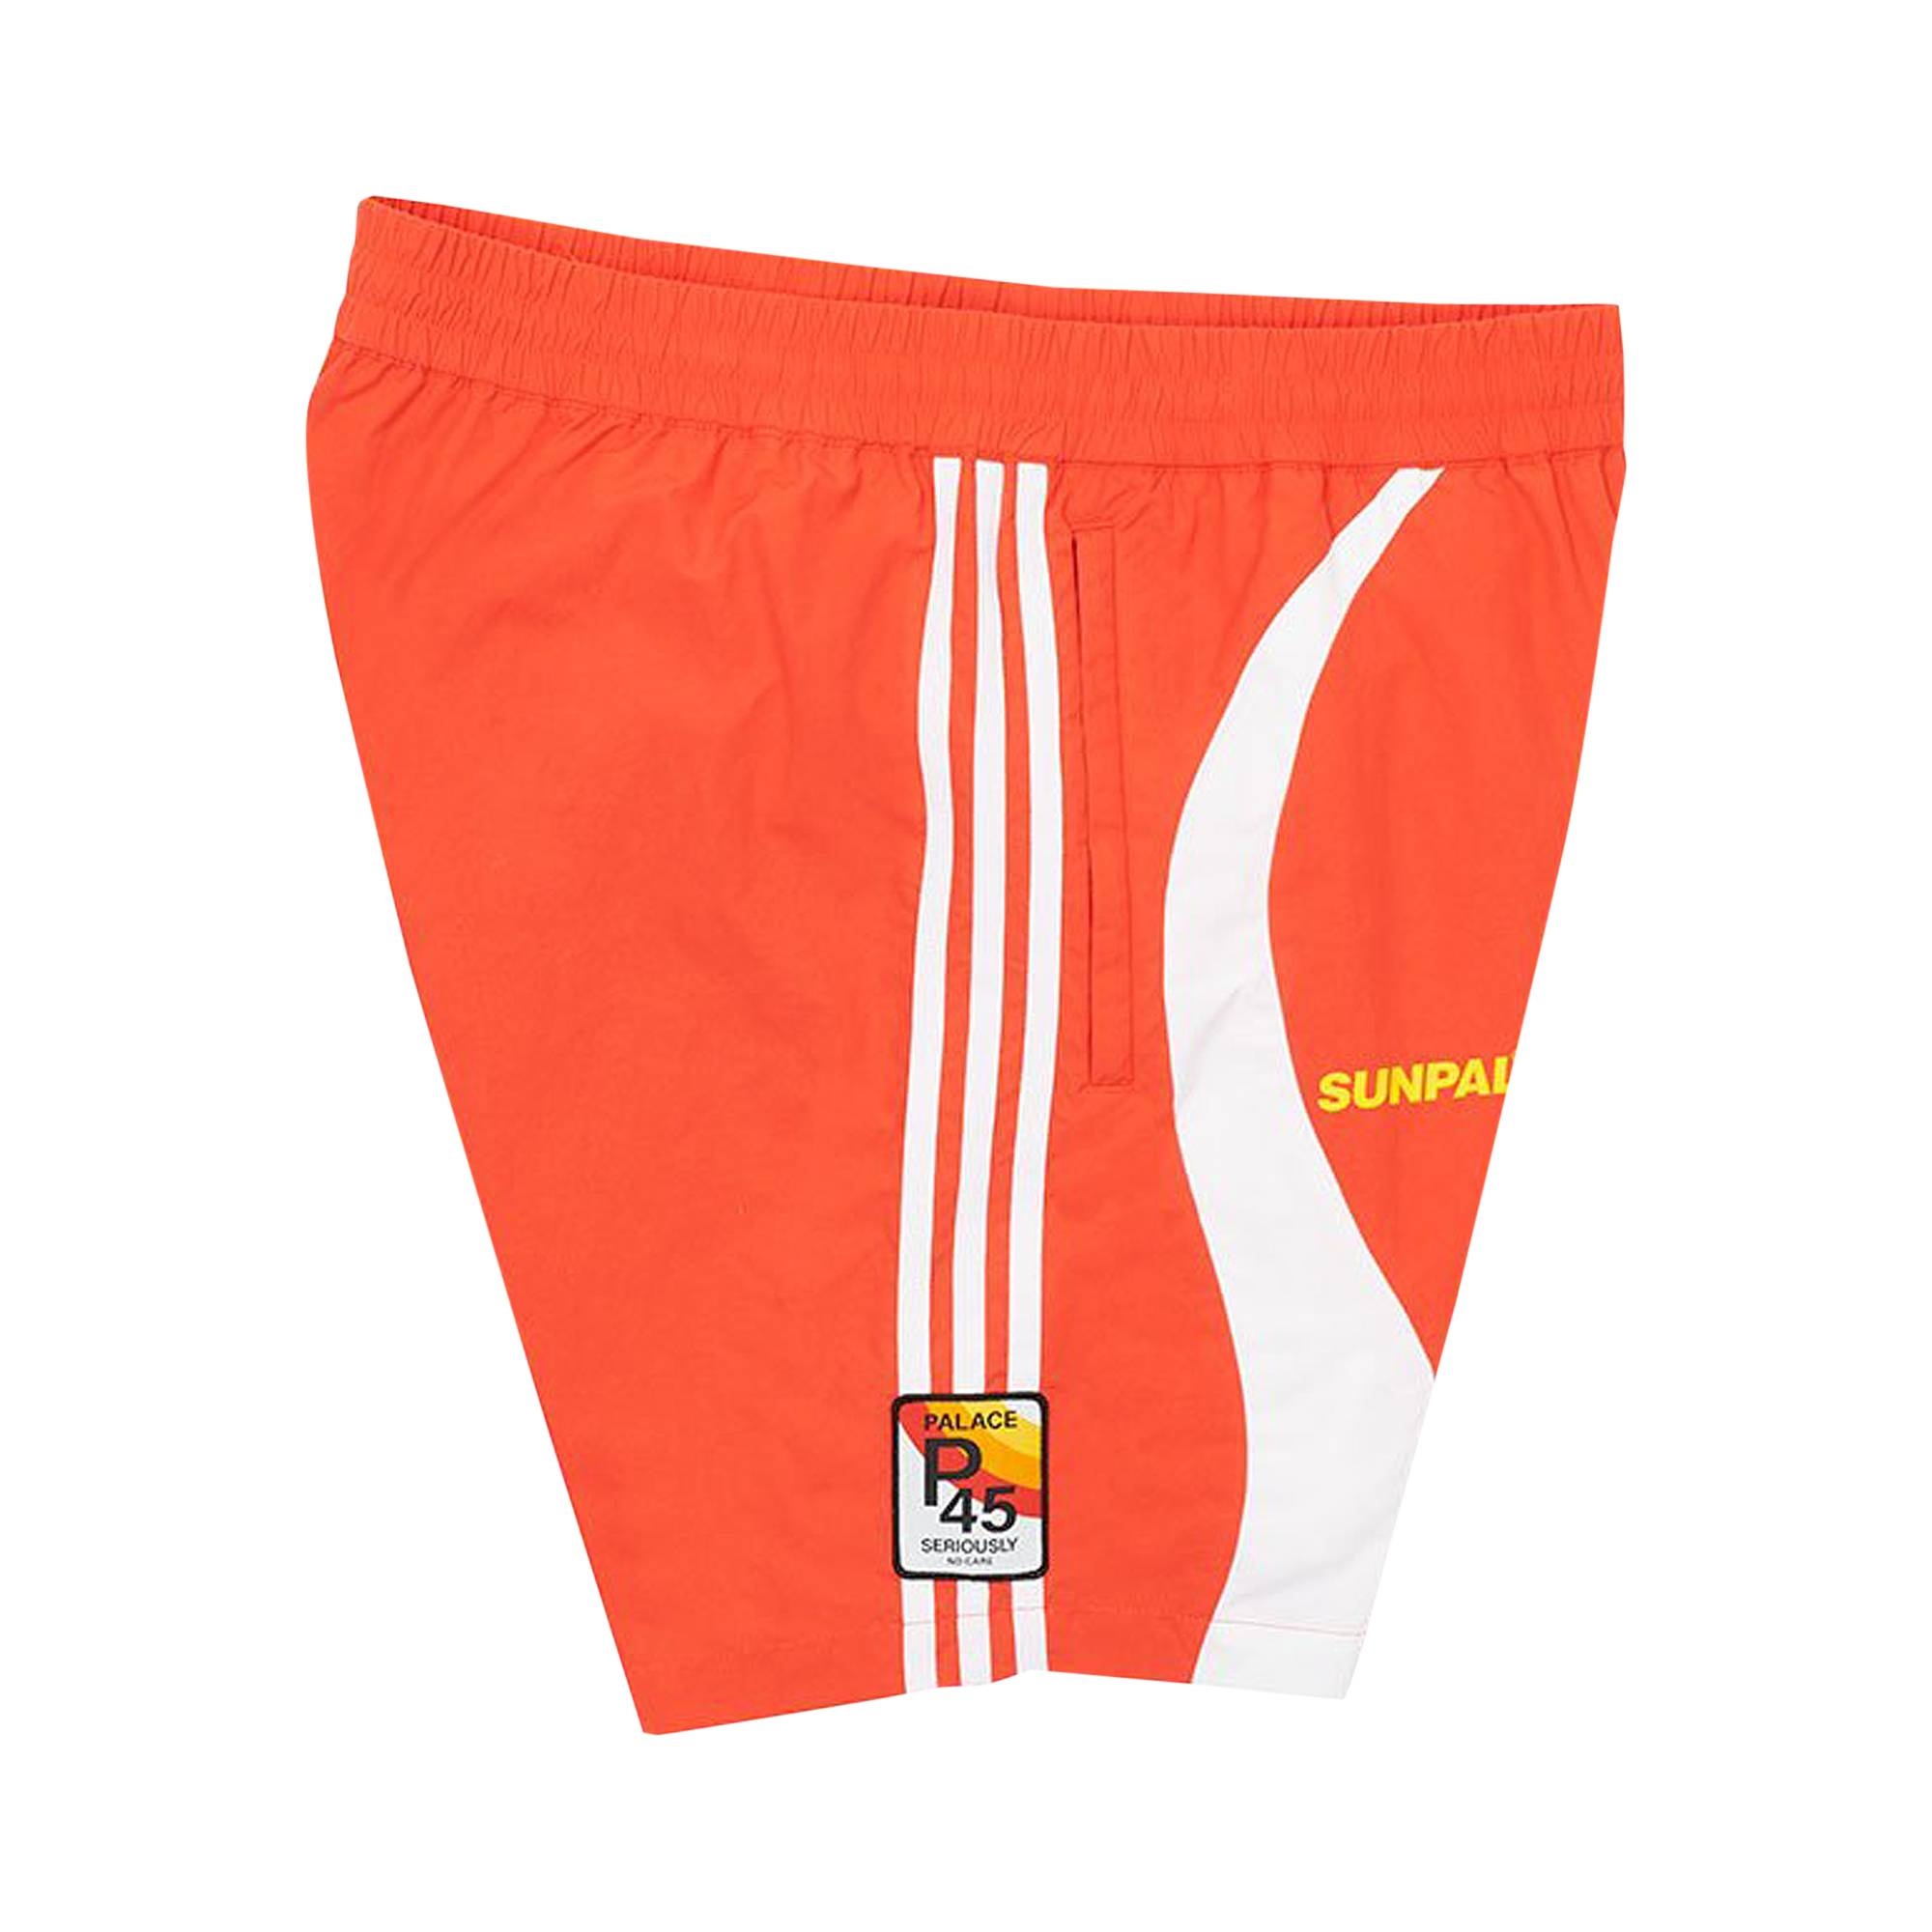 Palace x adidas Sunpal Shorts 'Bright Orange' - 4